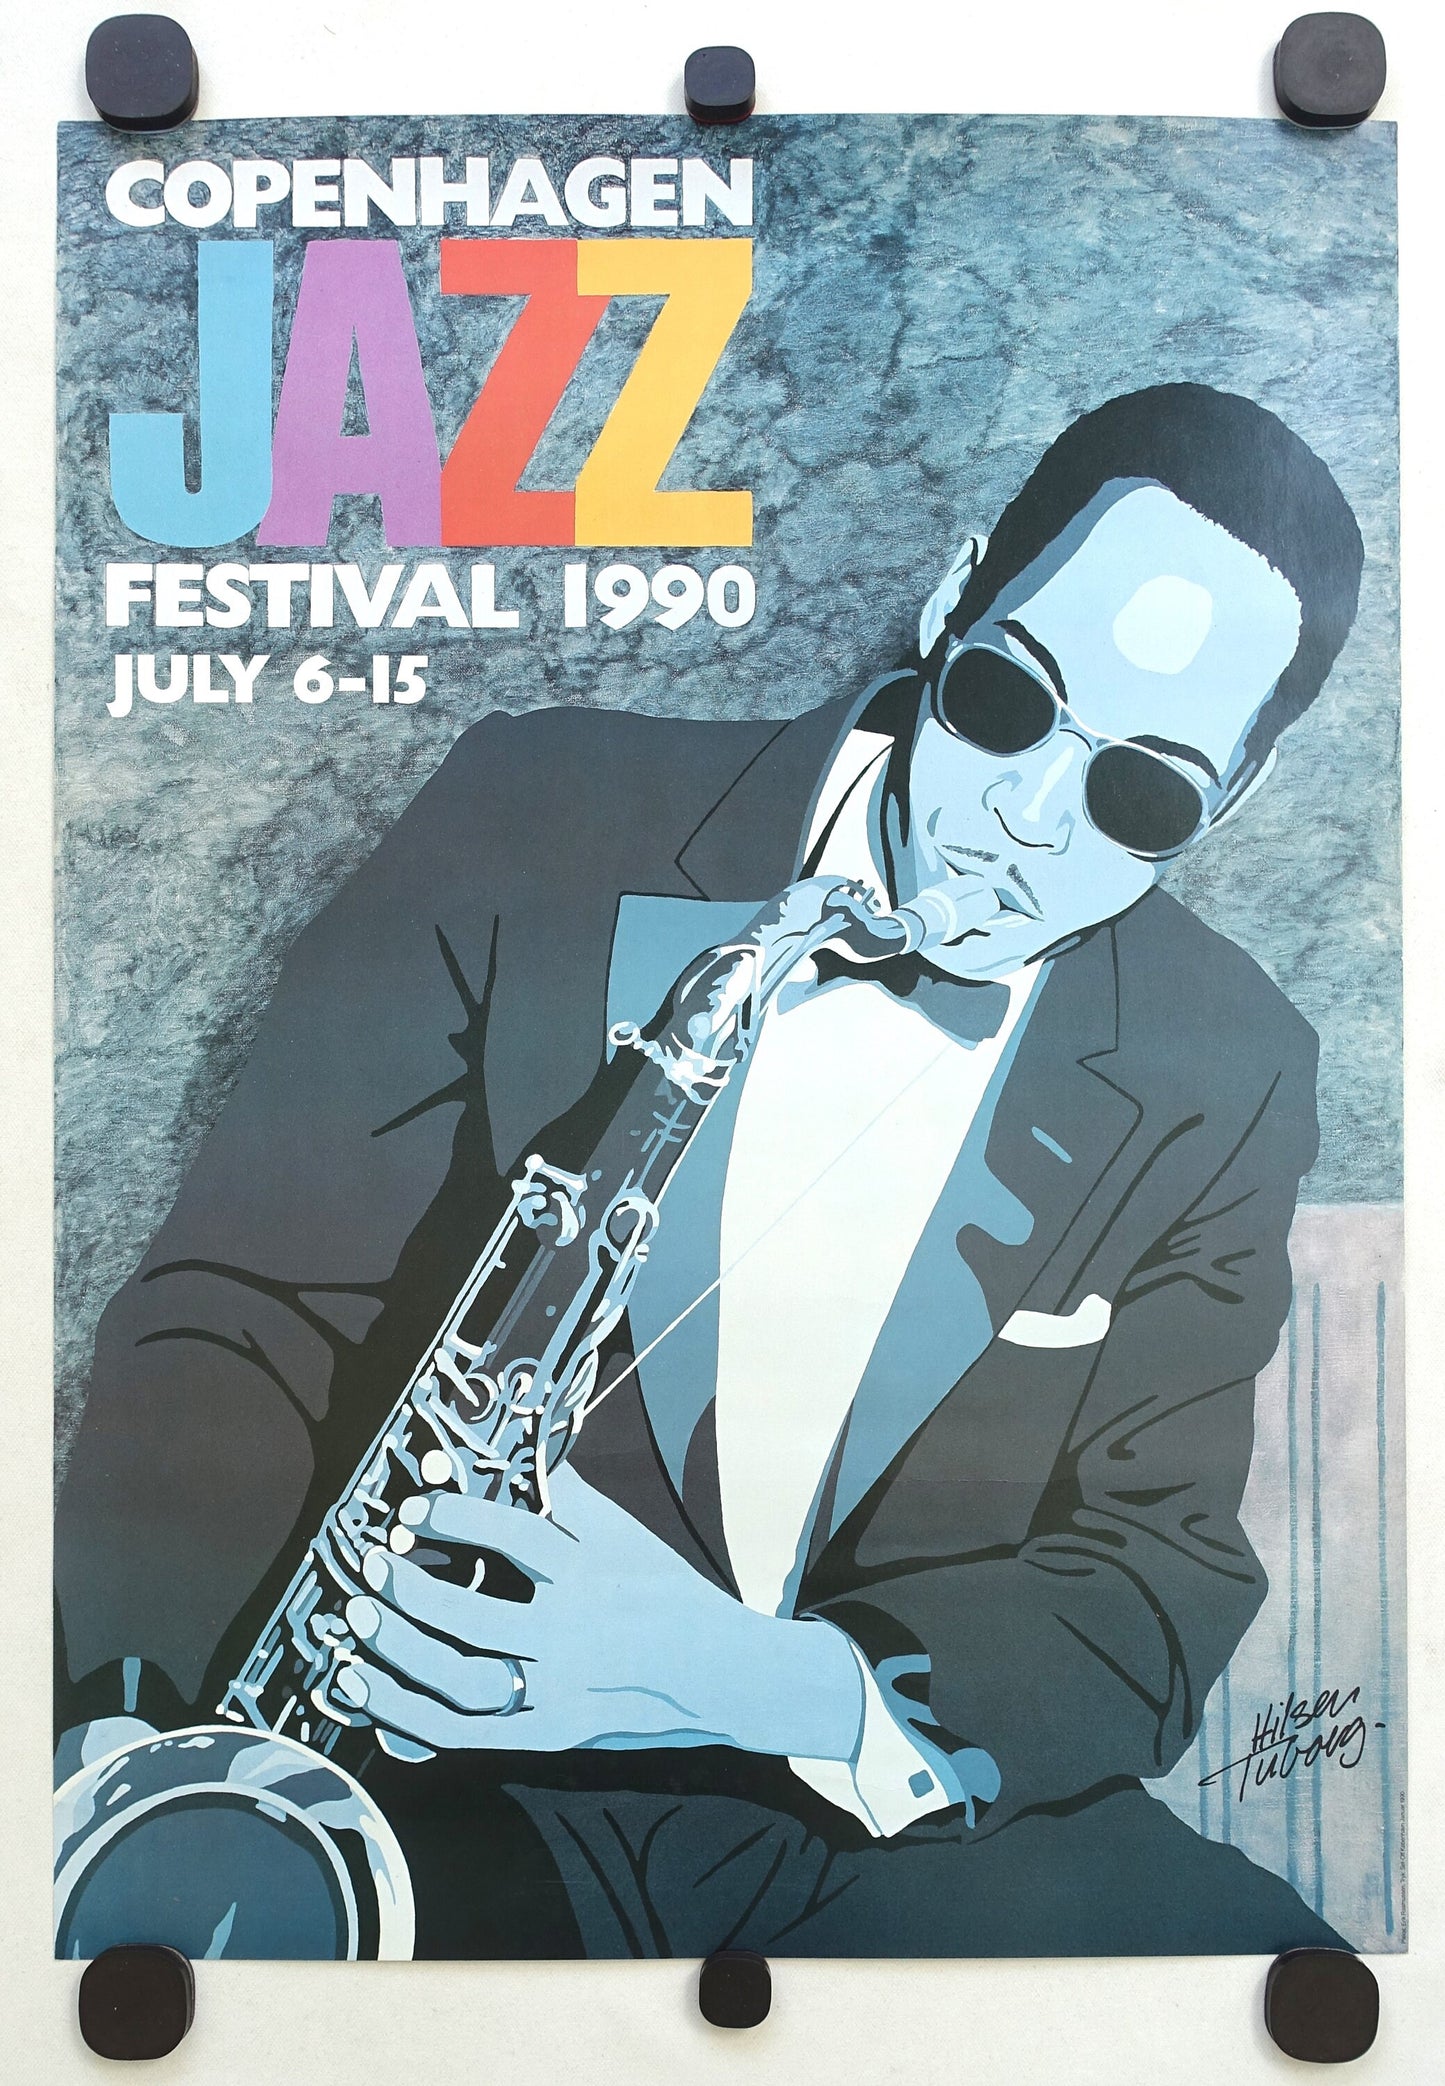 1990 Copenhagen Jazz Festival - Original Vintage Poster